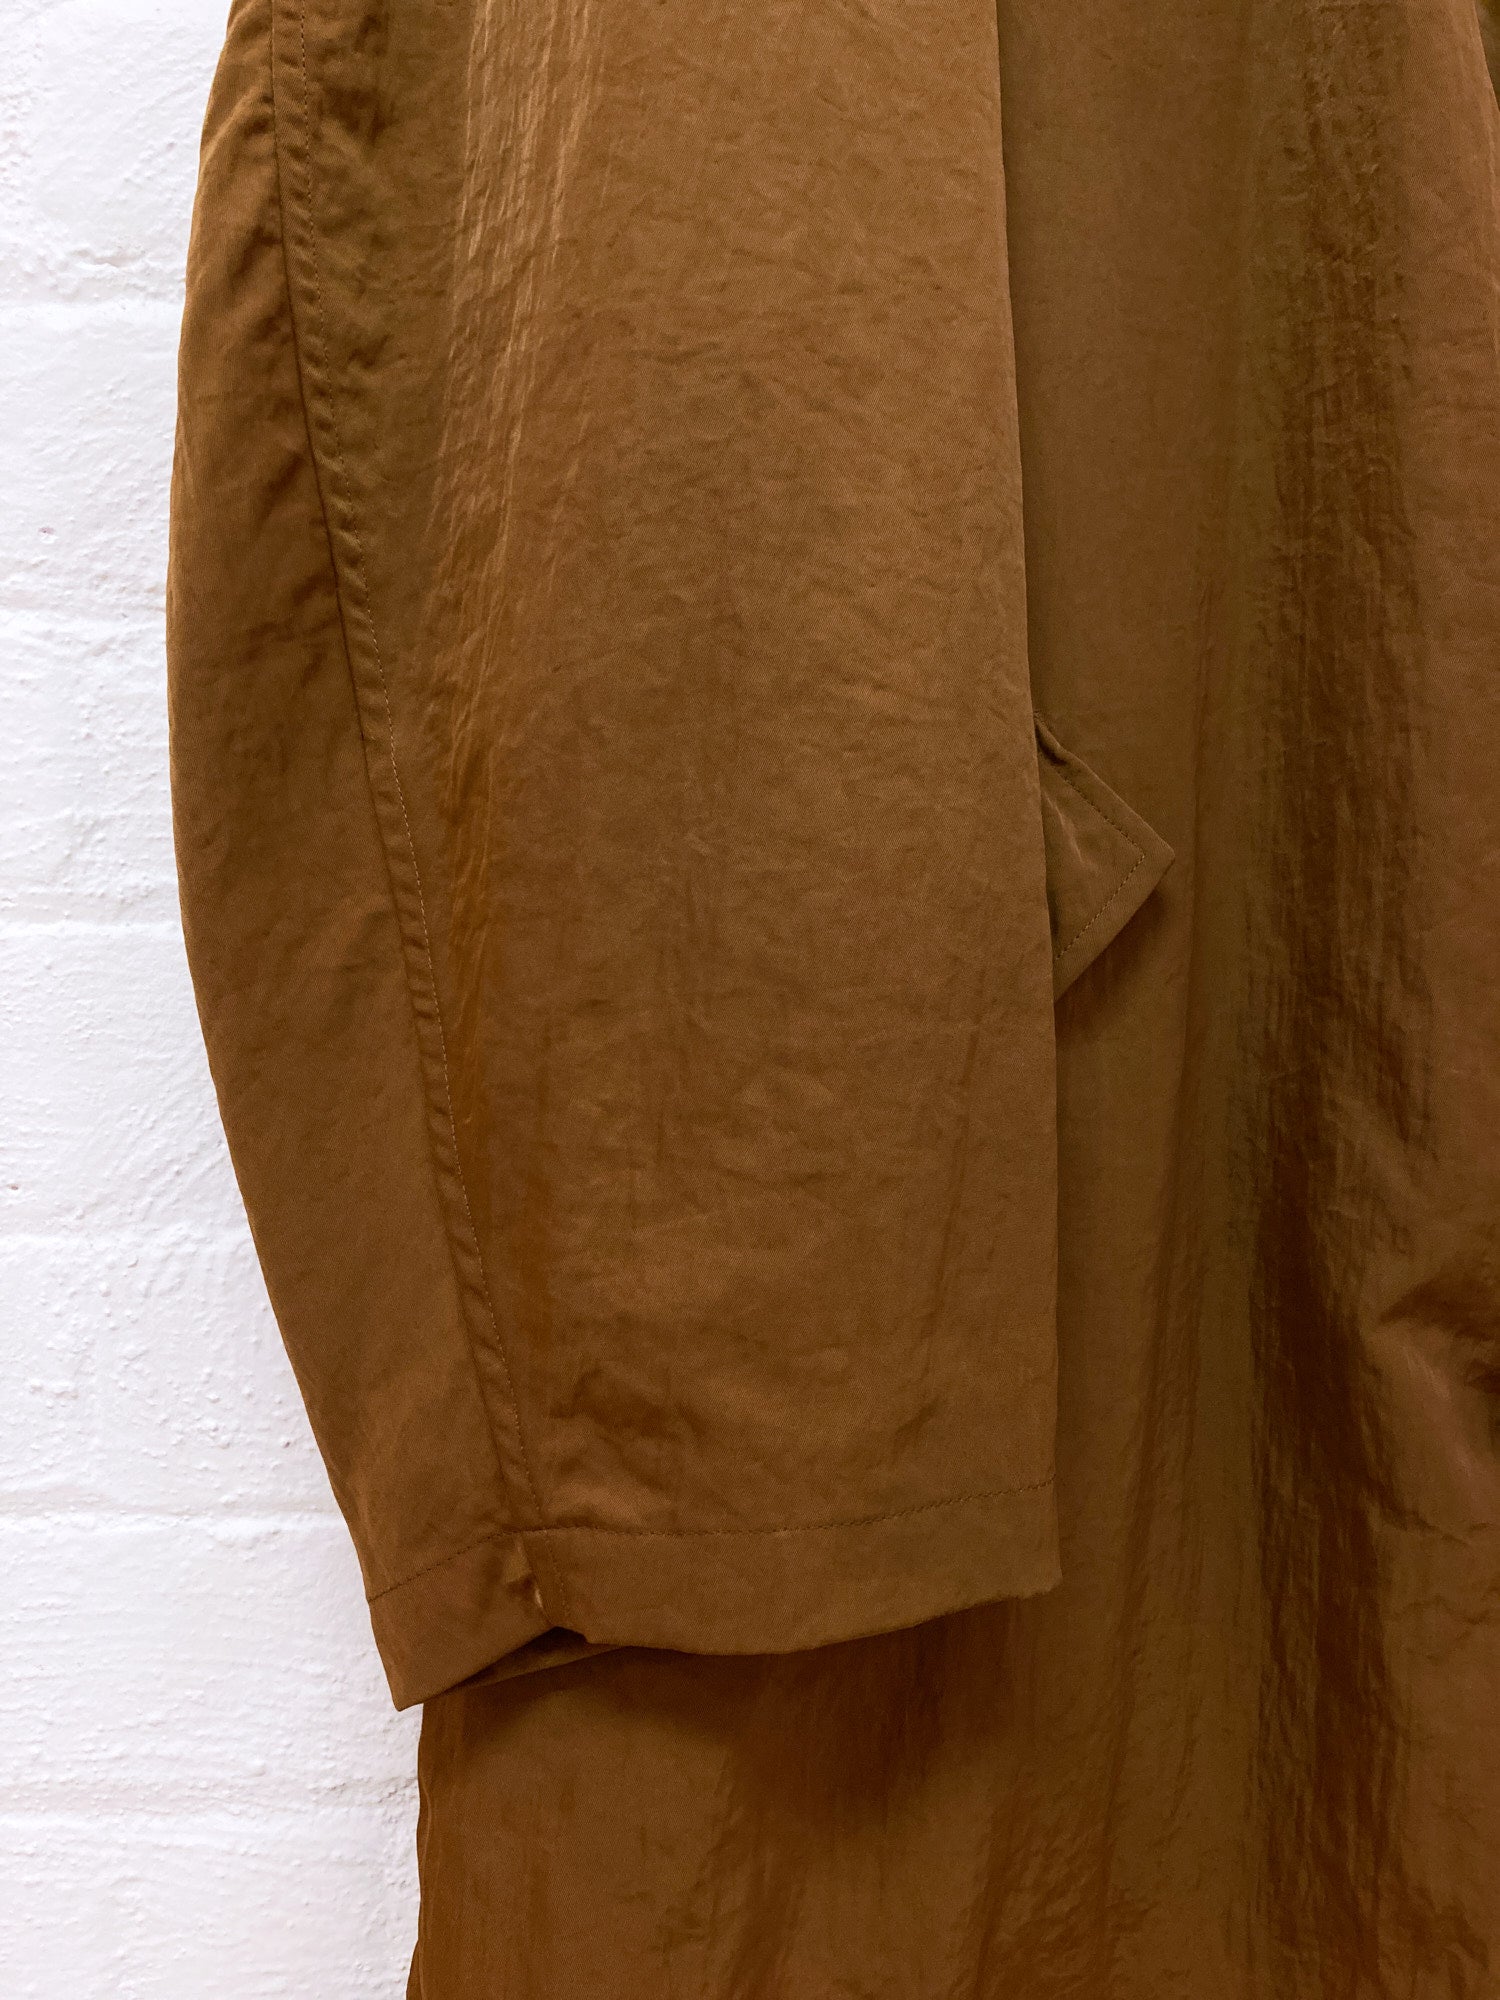 Y's for Men Yohji Yamamoto 1980s brown creased nylon mackintosh coat - L M